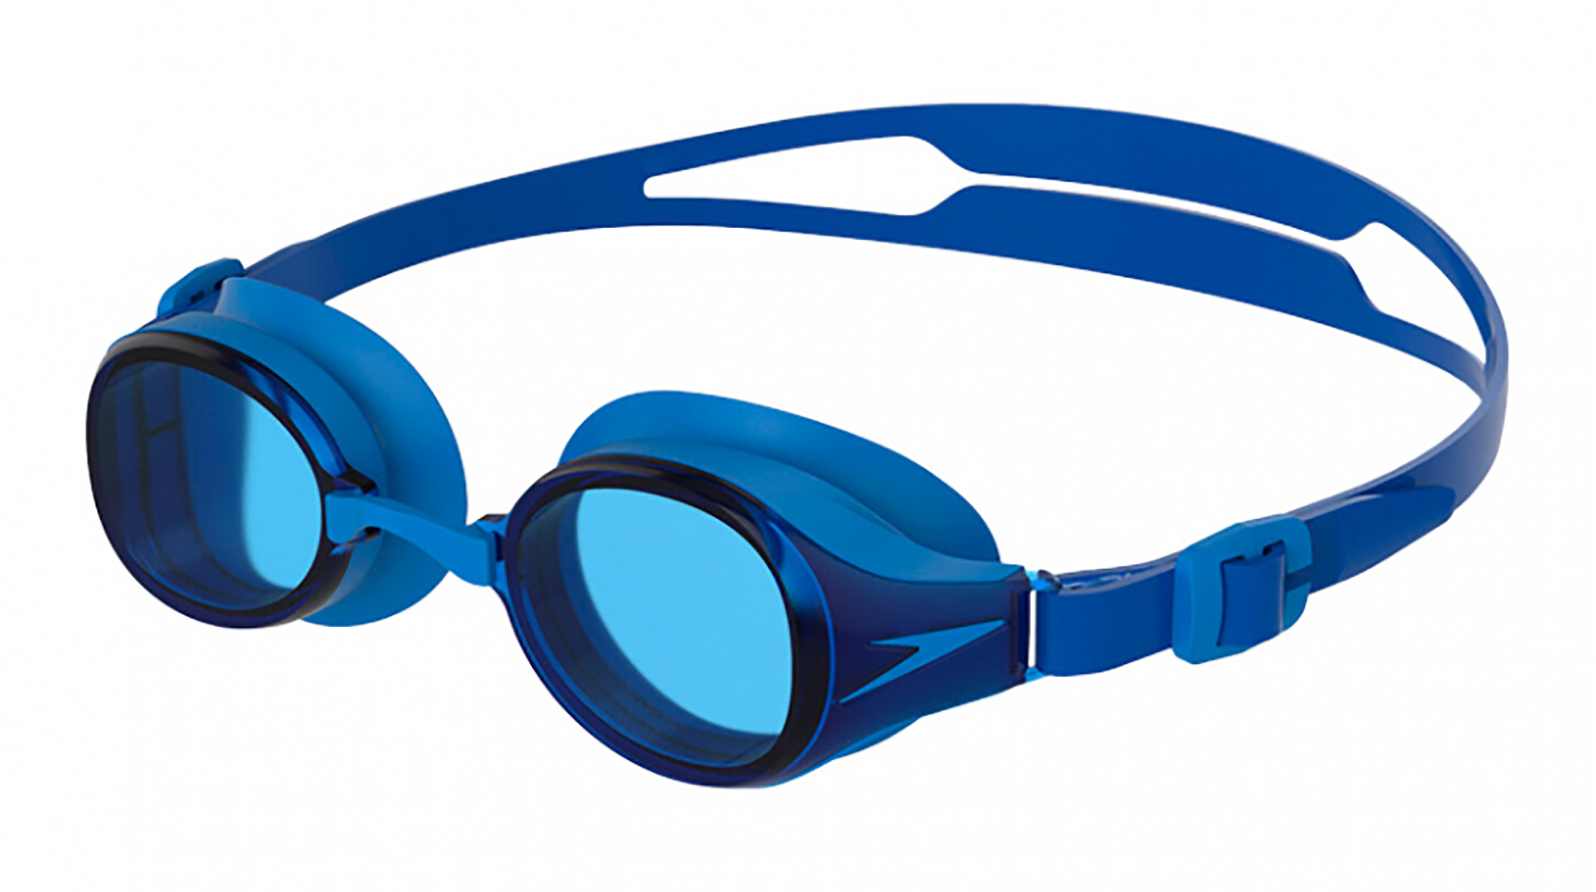 Speedo Очки для плавания Hydropure Optical F809 -5.5 speedo очки для плавания hydropure optical f809 4 5